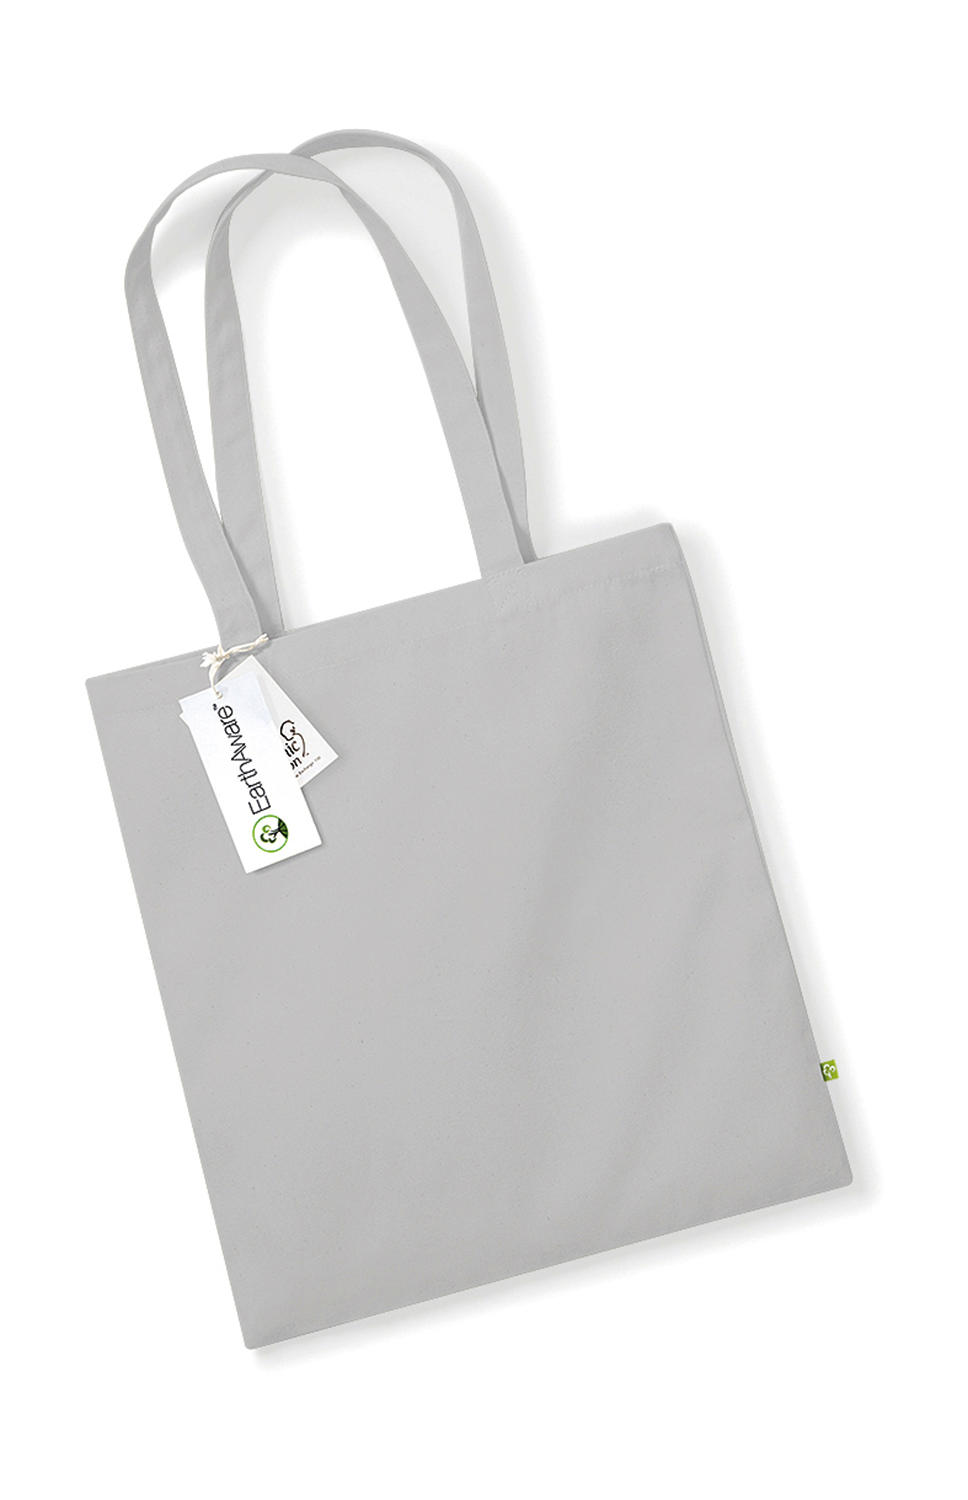  EarthAware? Organic Bag for Life in Farbe Light Grey